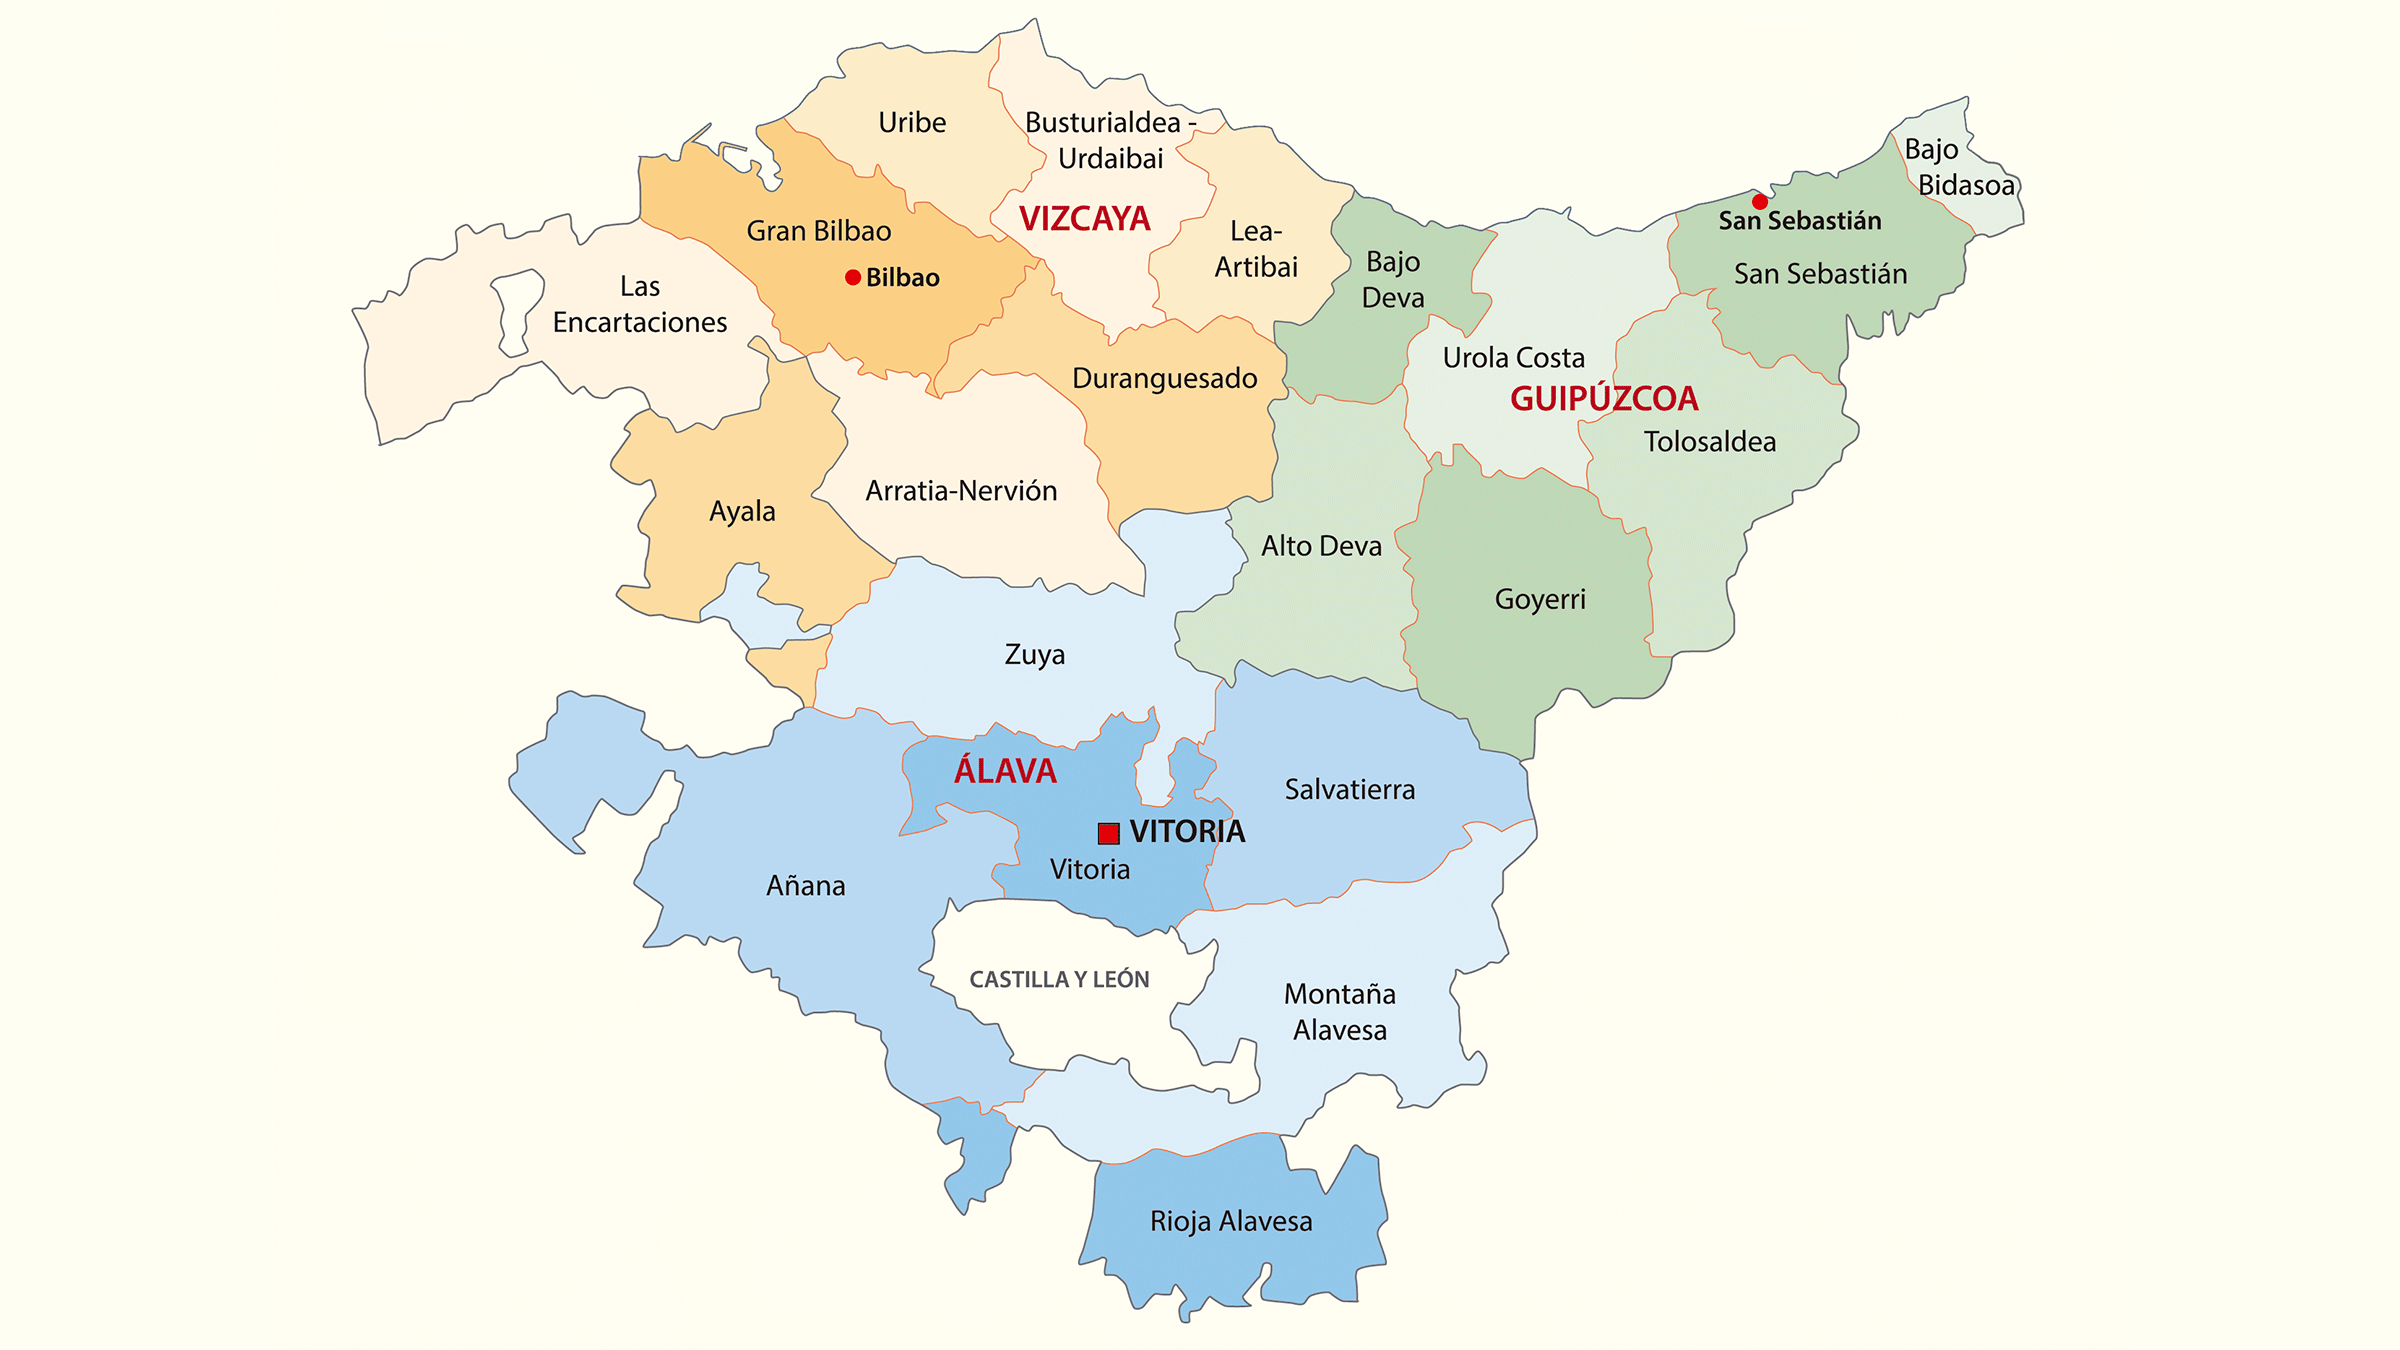 mapa pais vasco